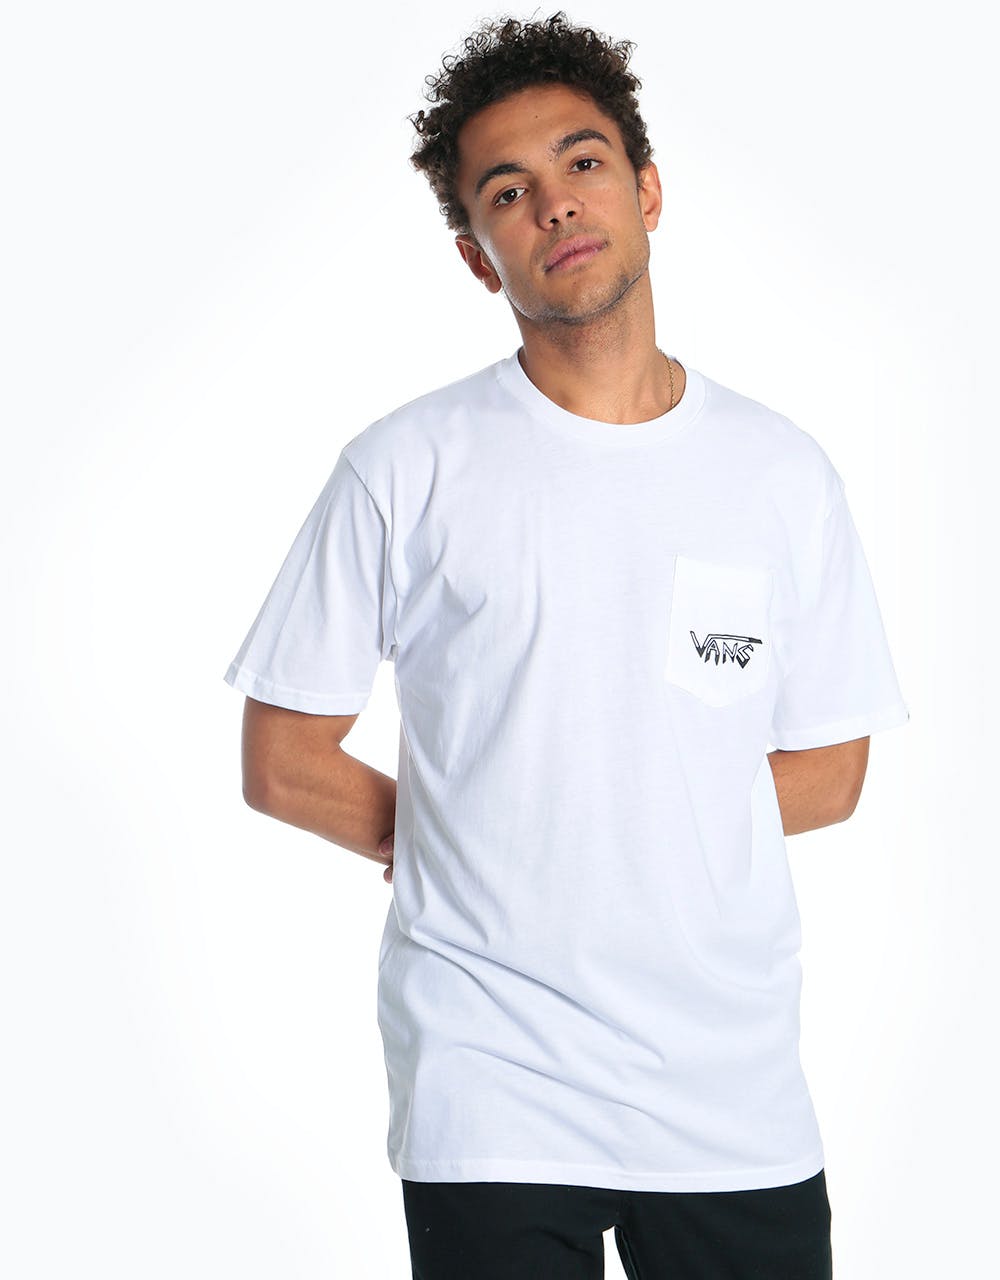 Vans Rowan Zorilla Skull T-Shirt - White